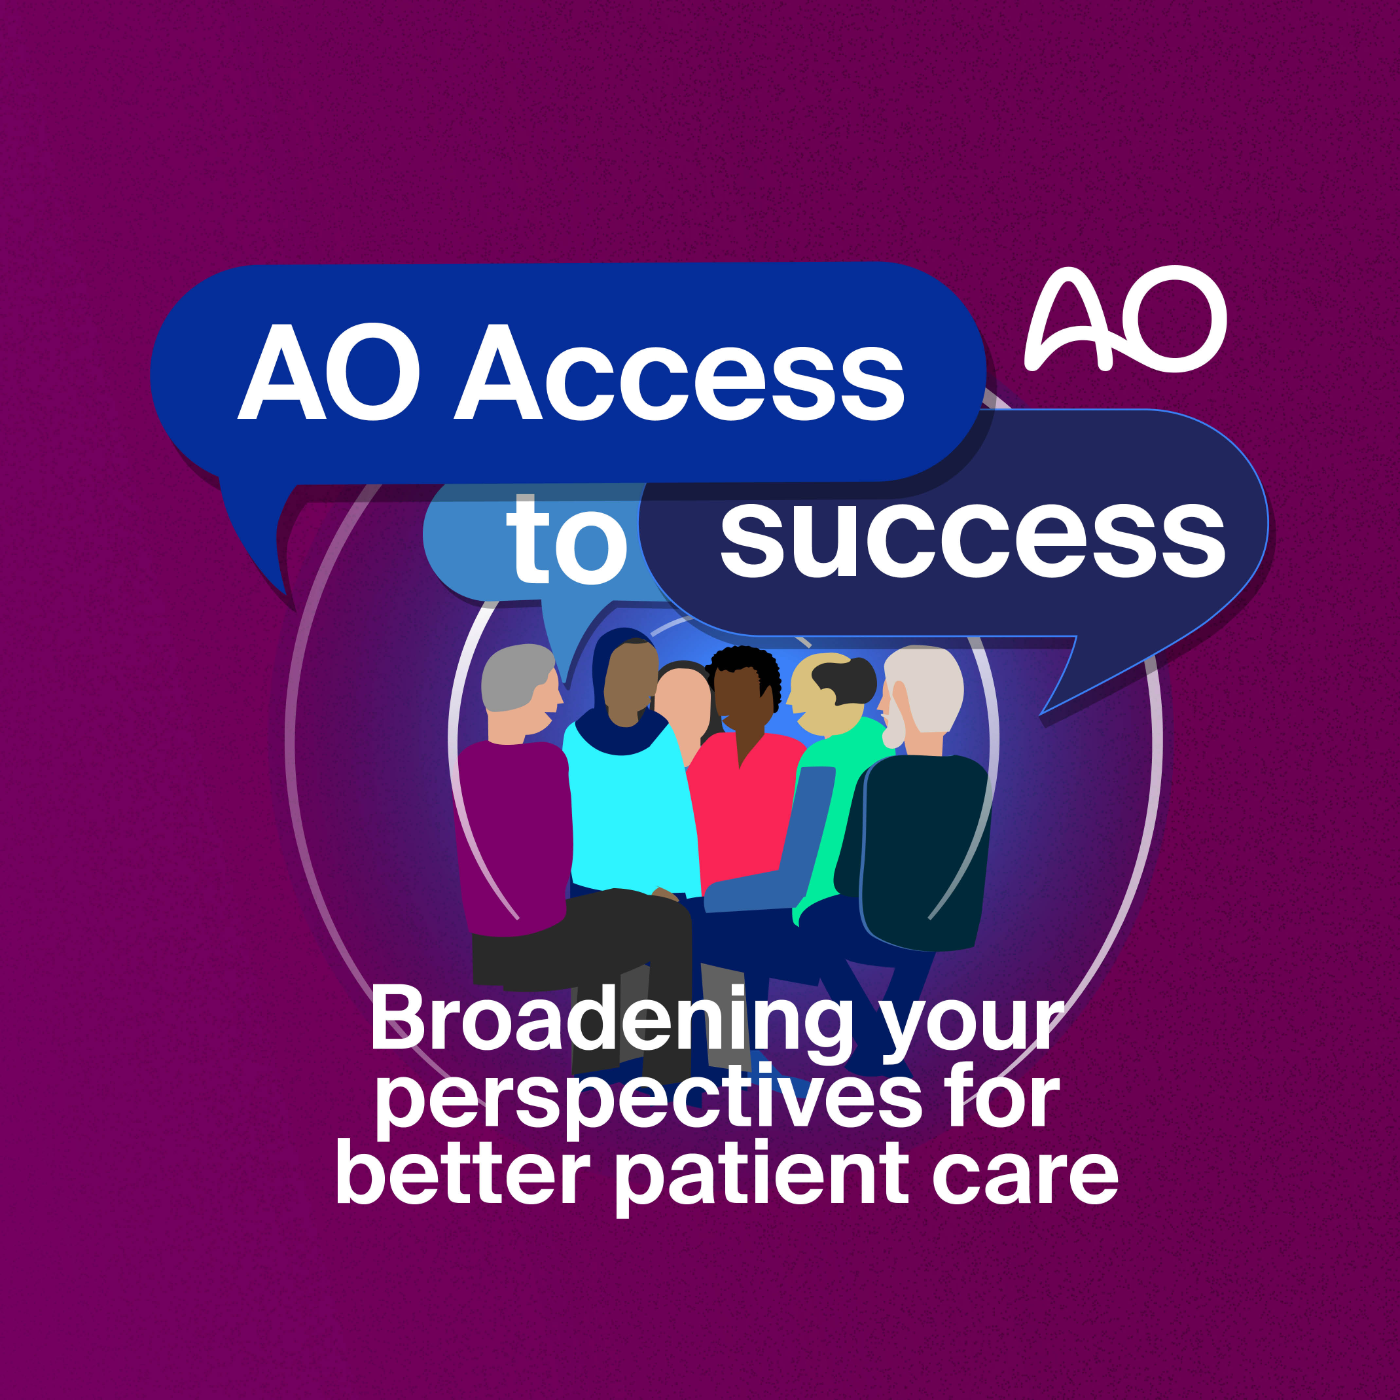 Artwork for AO Access to success